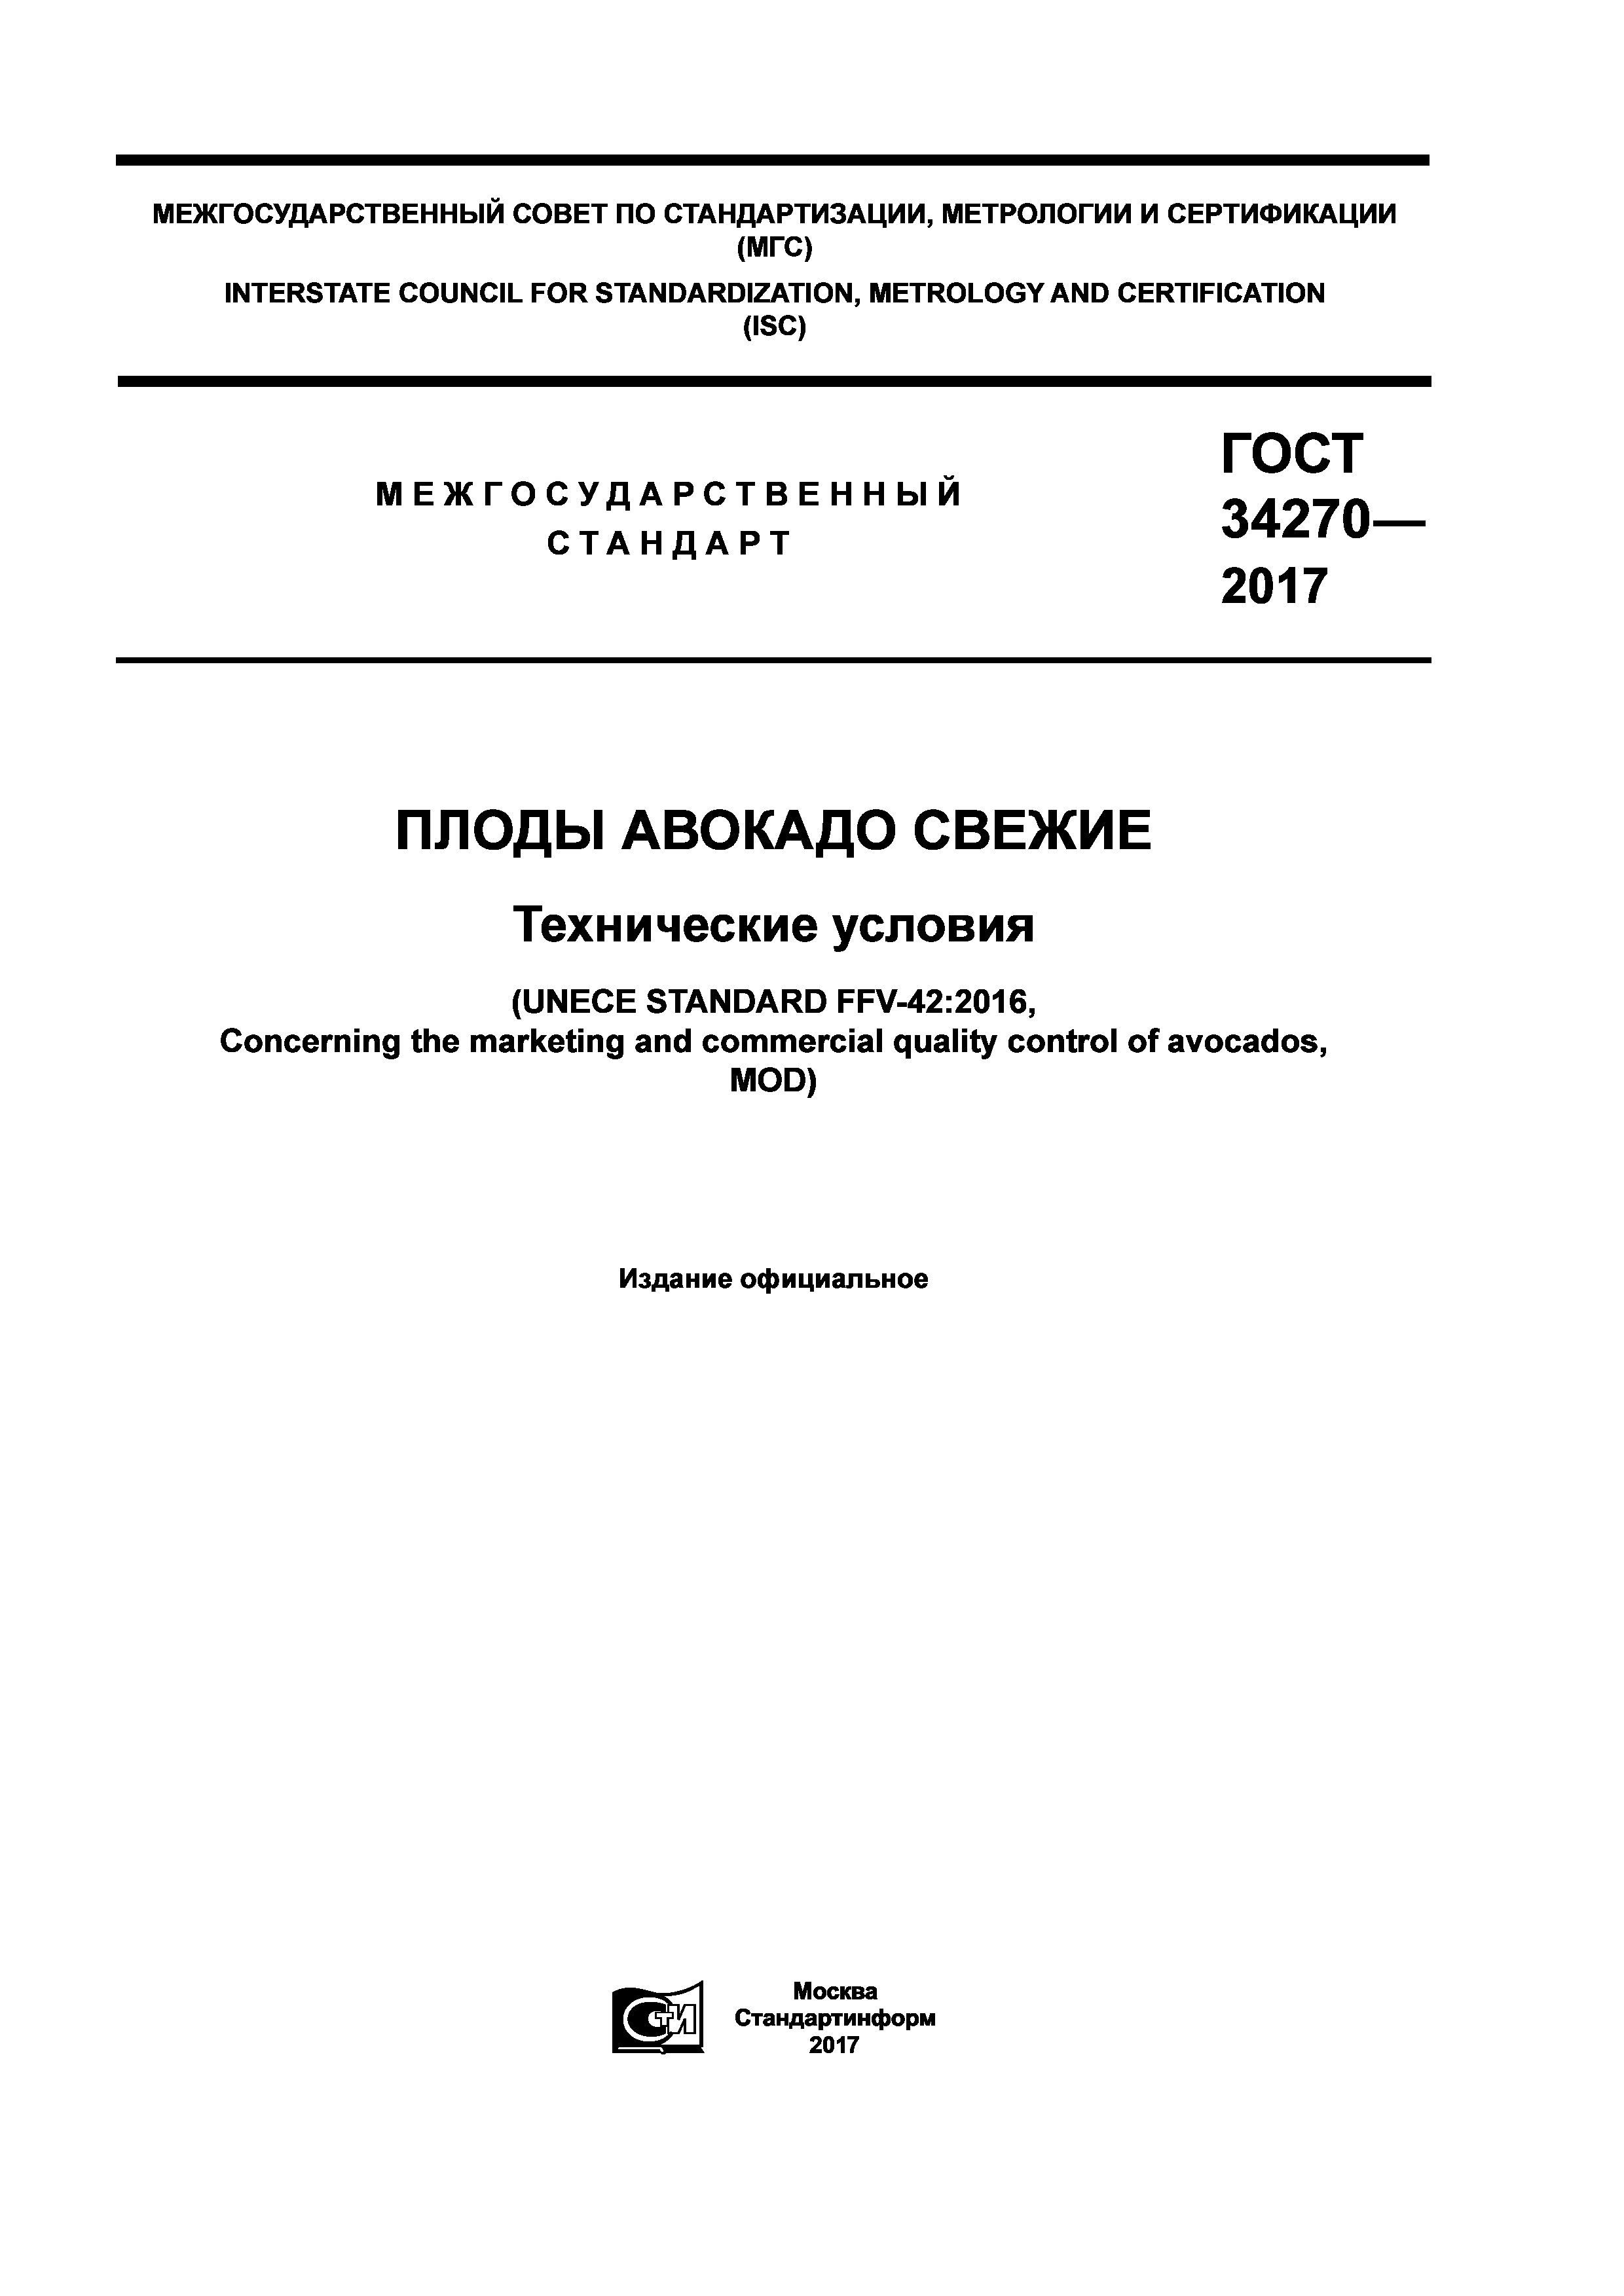 ГОСТ 34270-2017